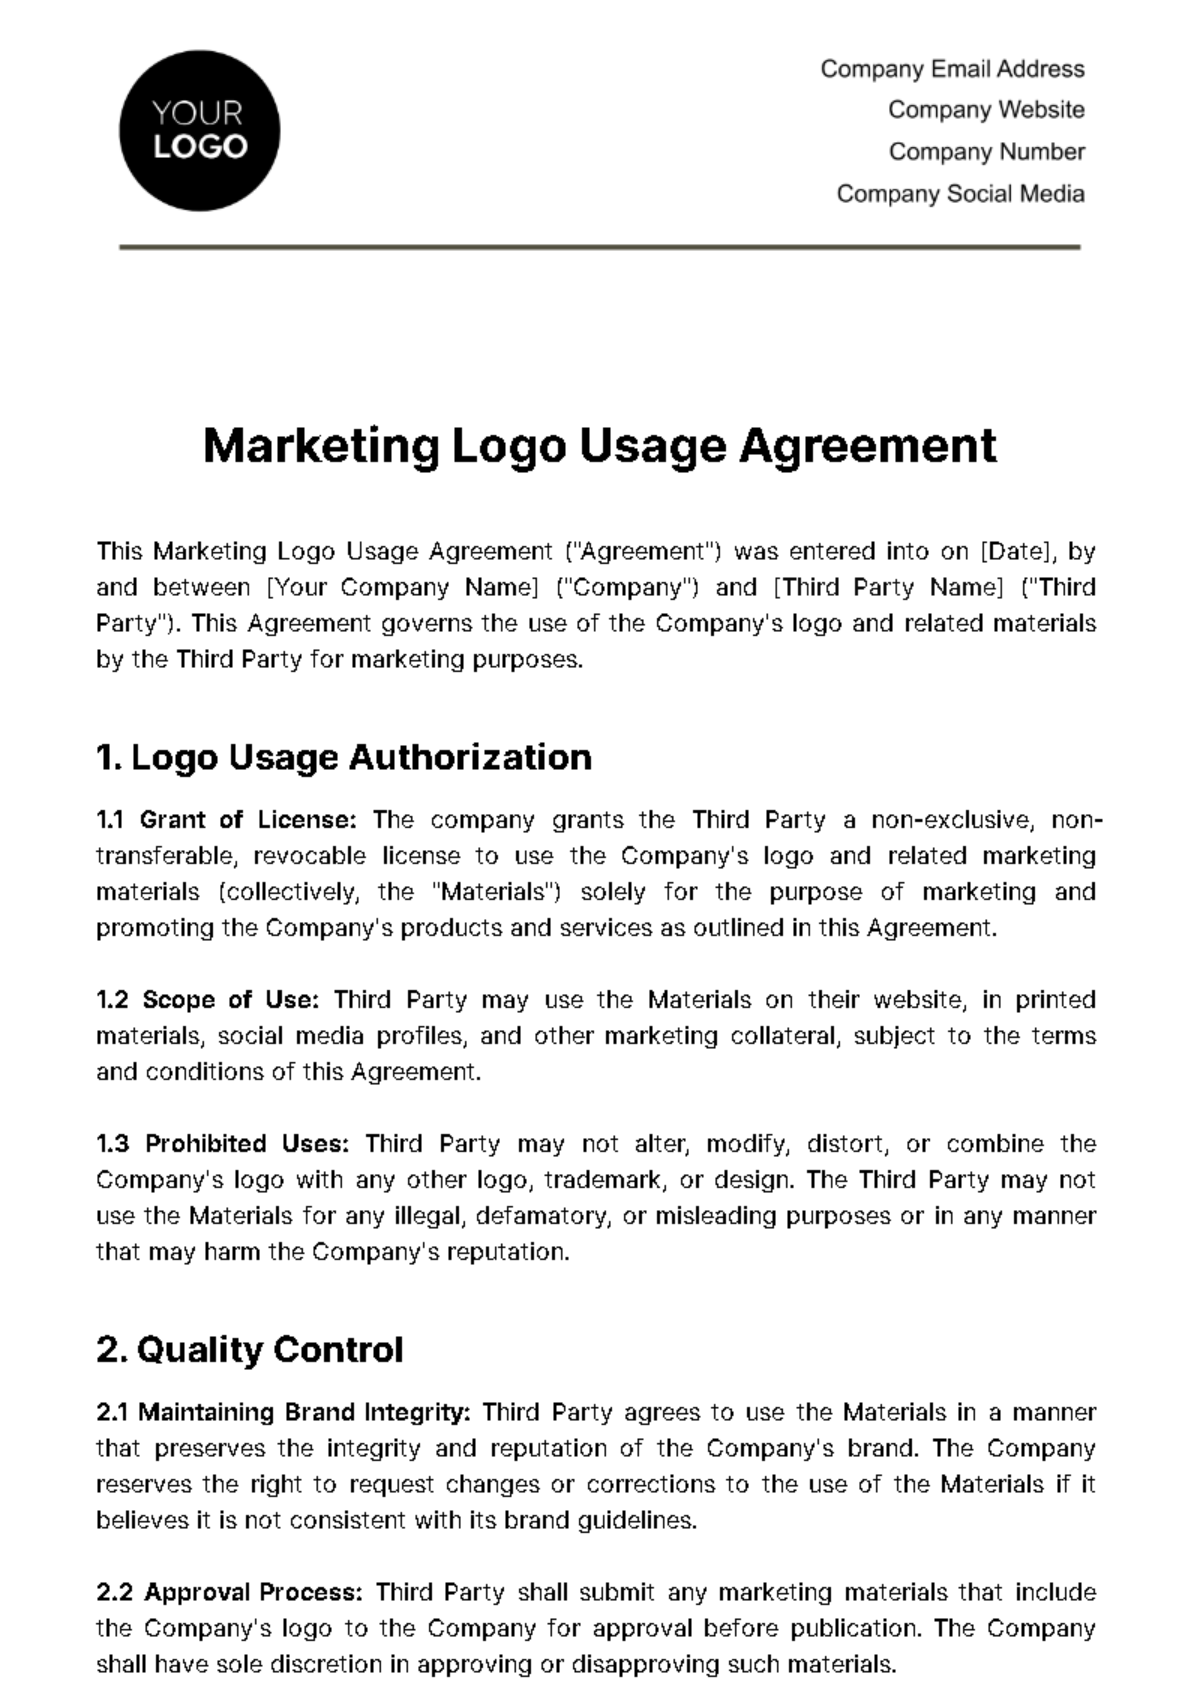 Marketing Logo Usage Agreement Template